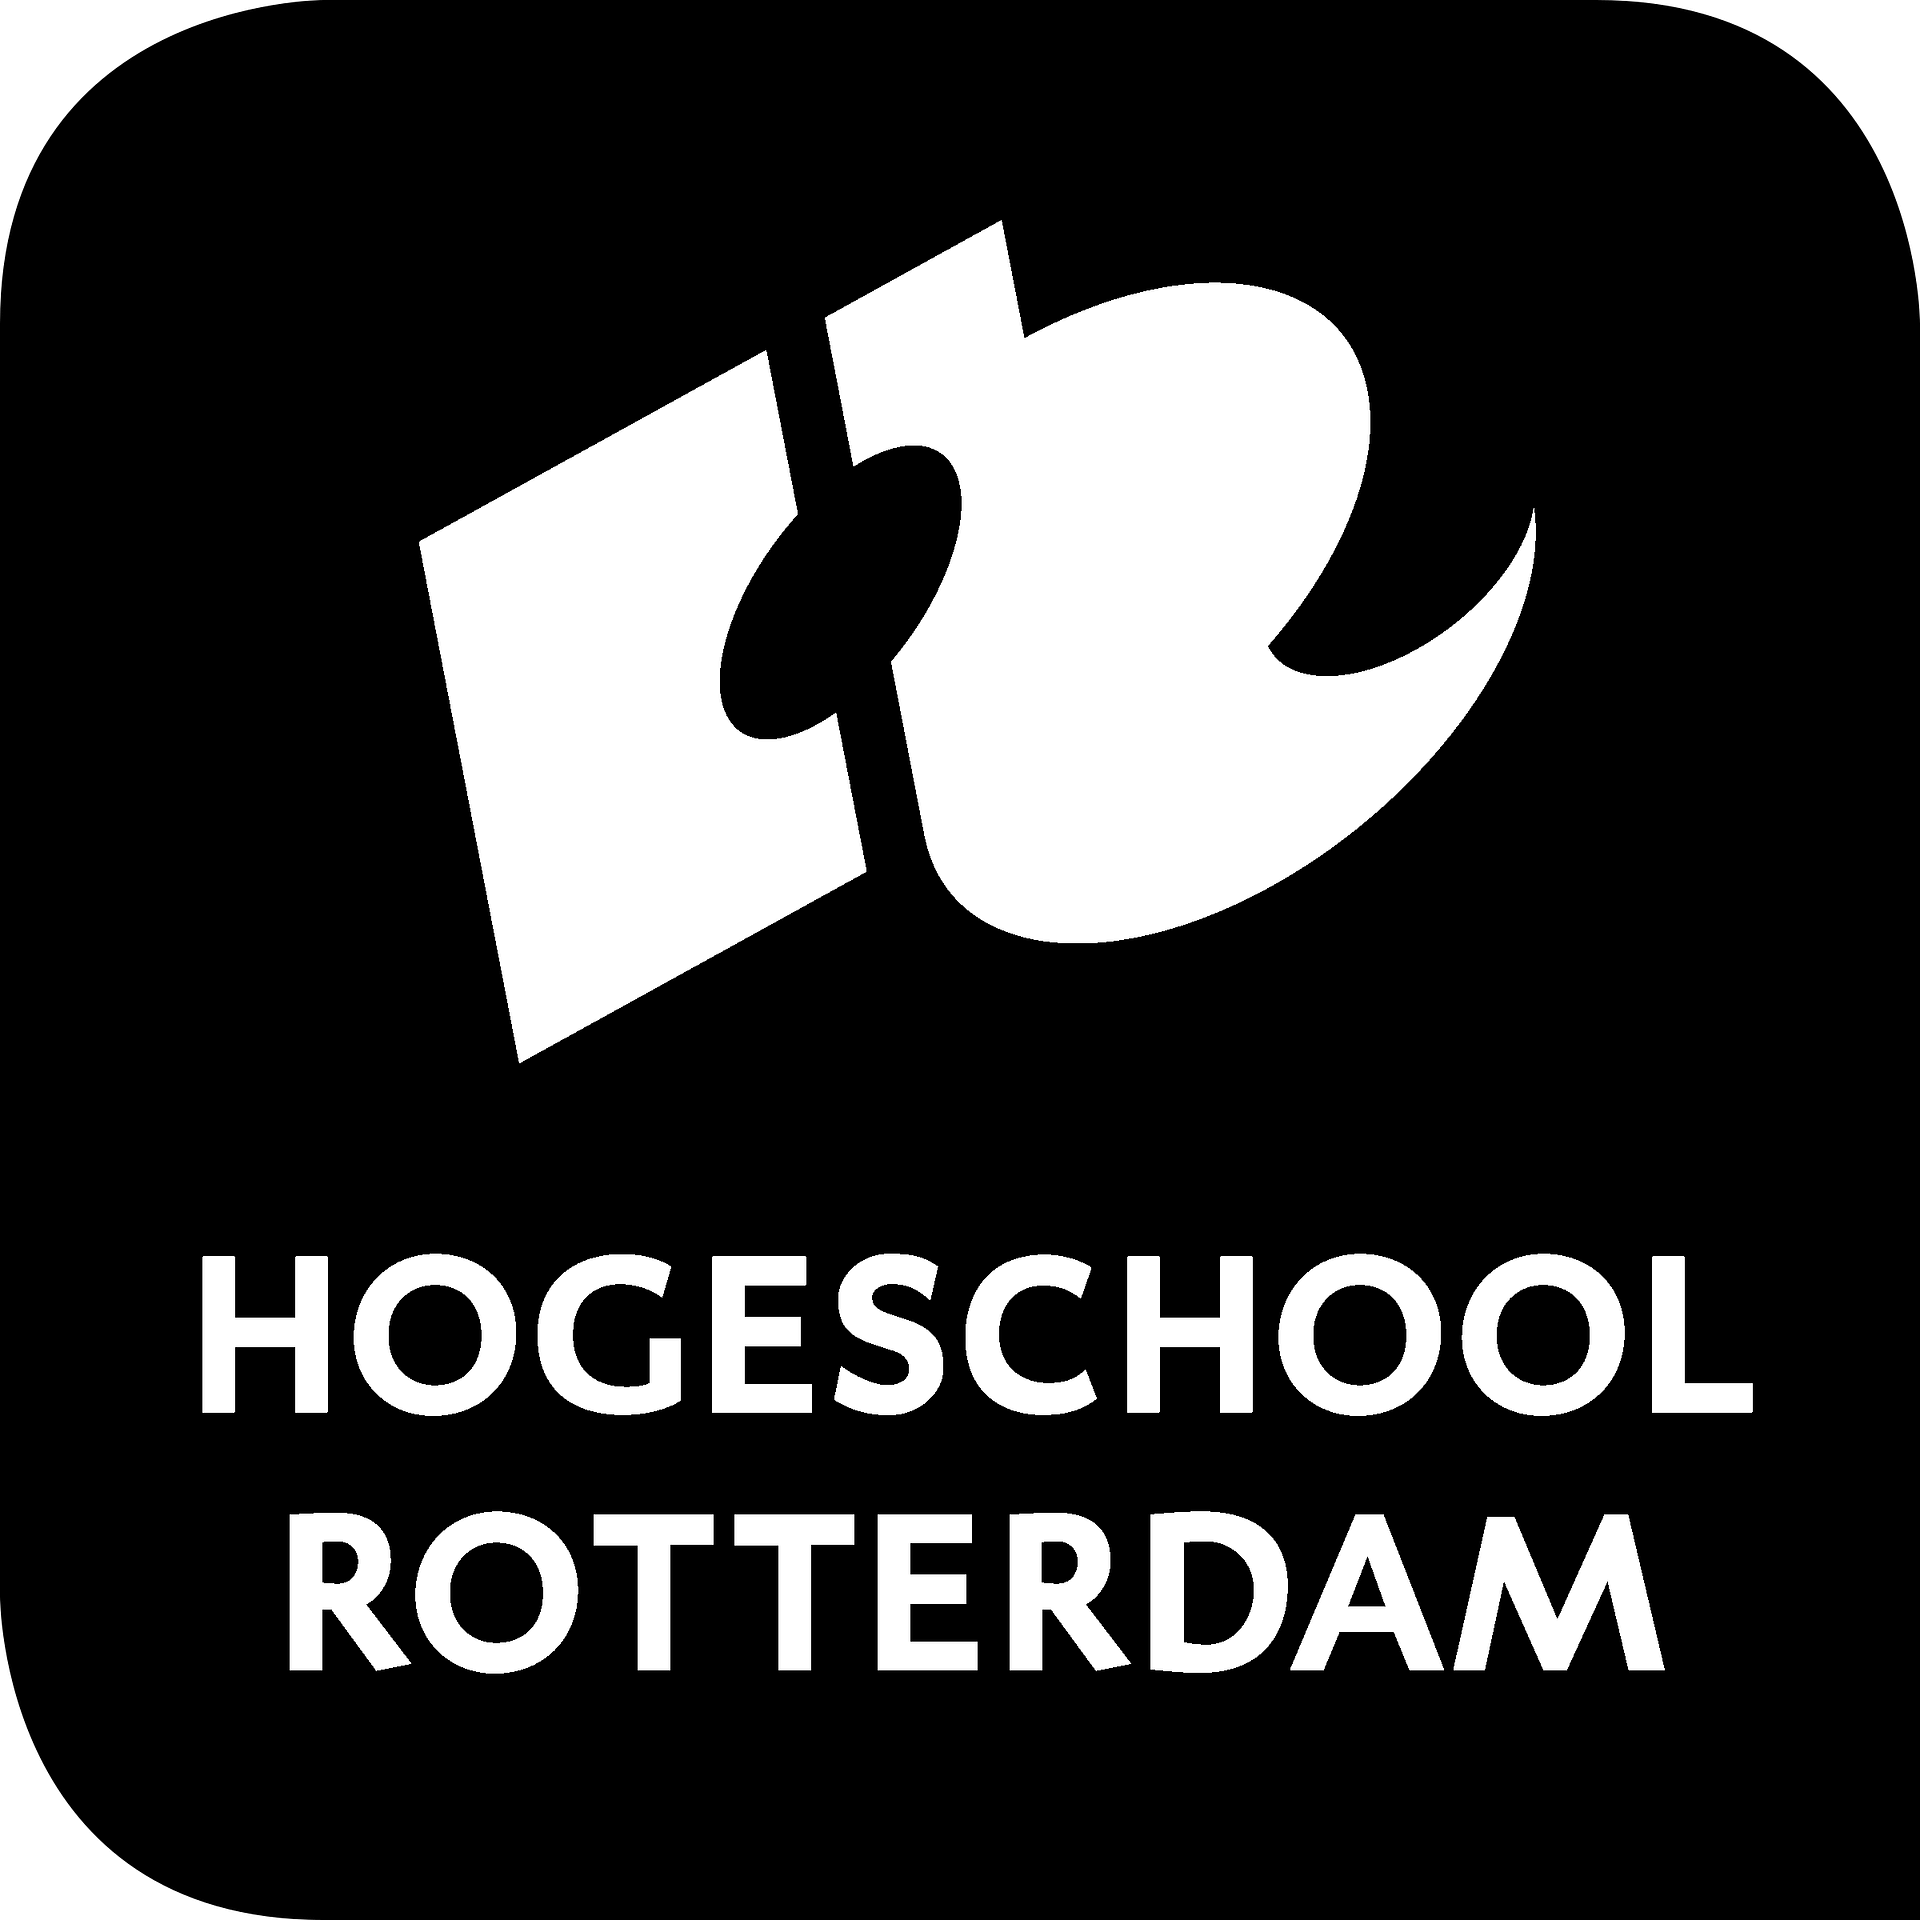 hogeschool-rotterdam-1-logo-black-and-white